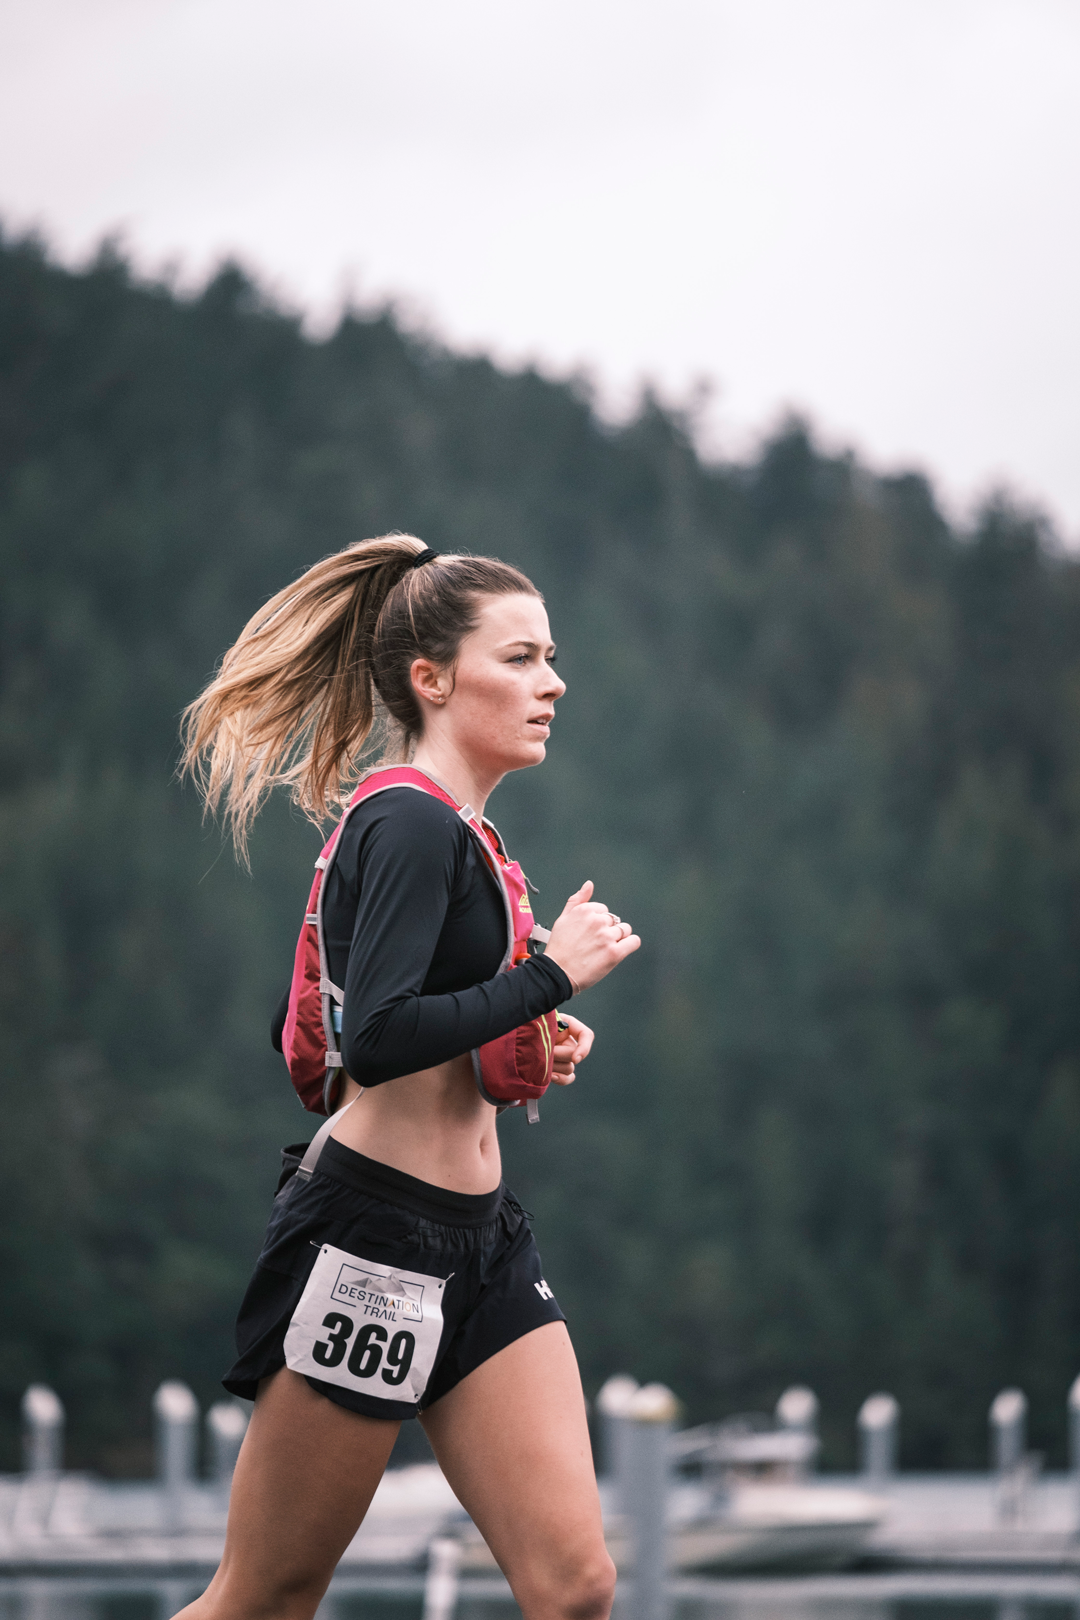  A female runner racing at Deception Pass 